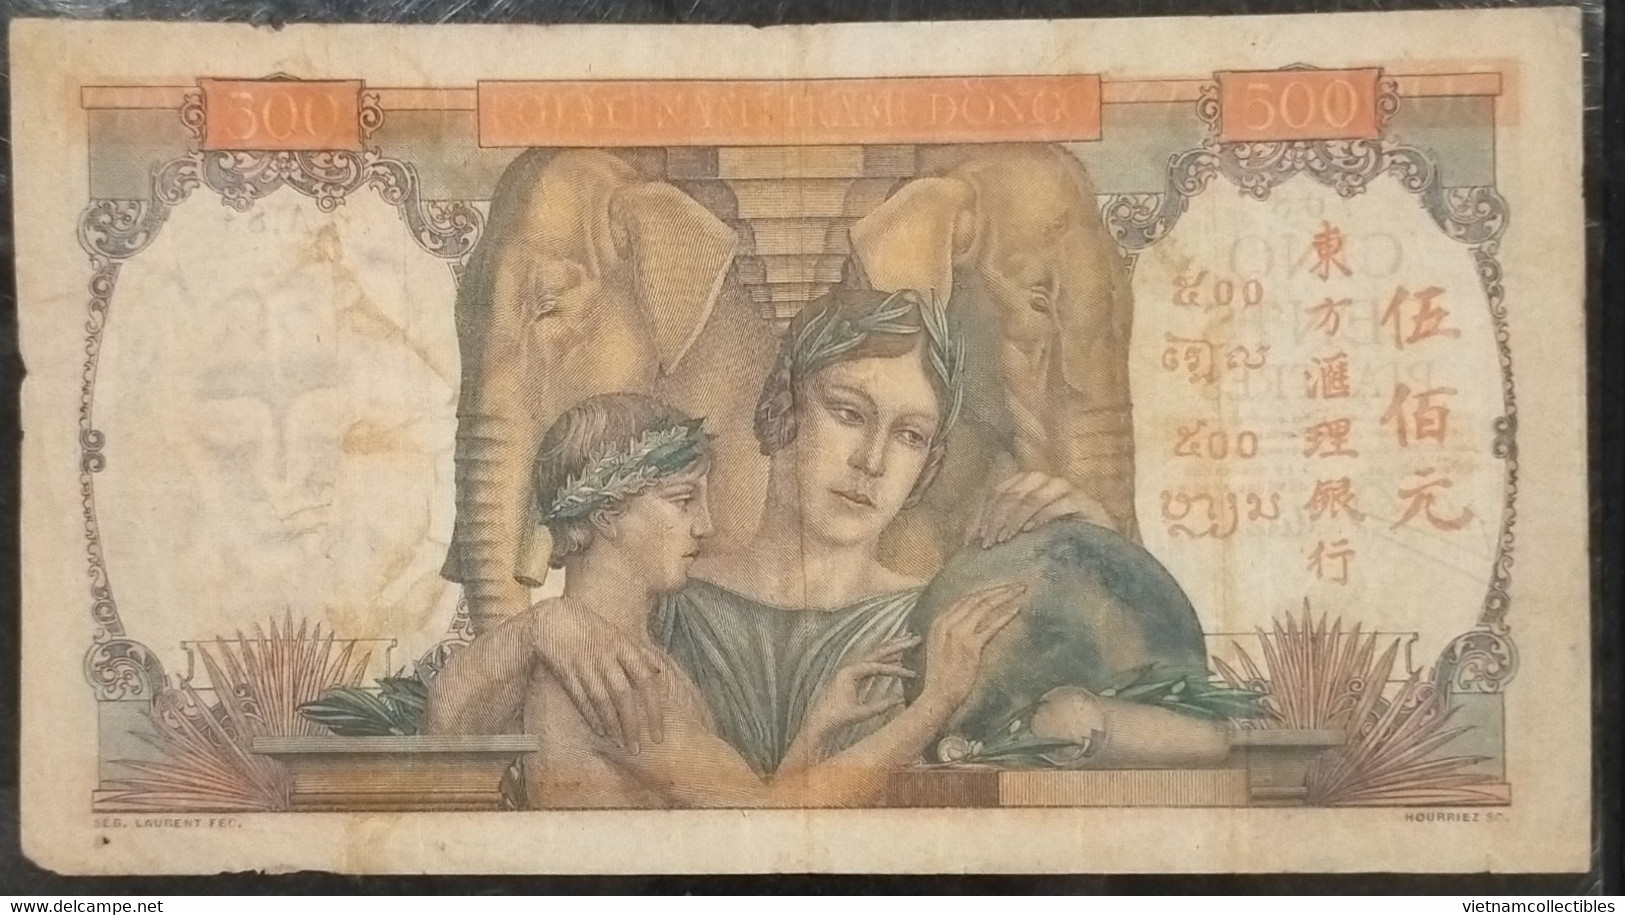 Indochina Indochine Vietnam Viet Nam Laos Cambodia 500 Piastres VF Banknote Note / Billet 1951 - Pick# 83 / 02 Photos - Indochina